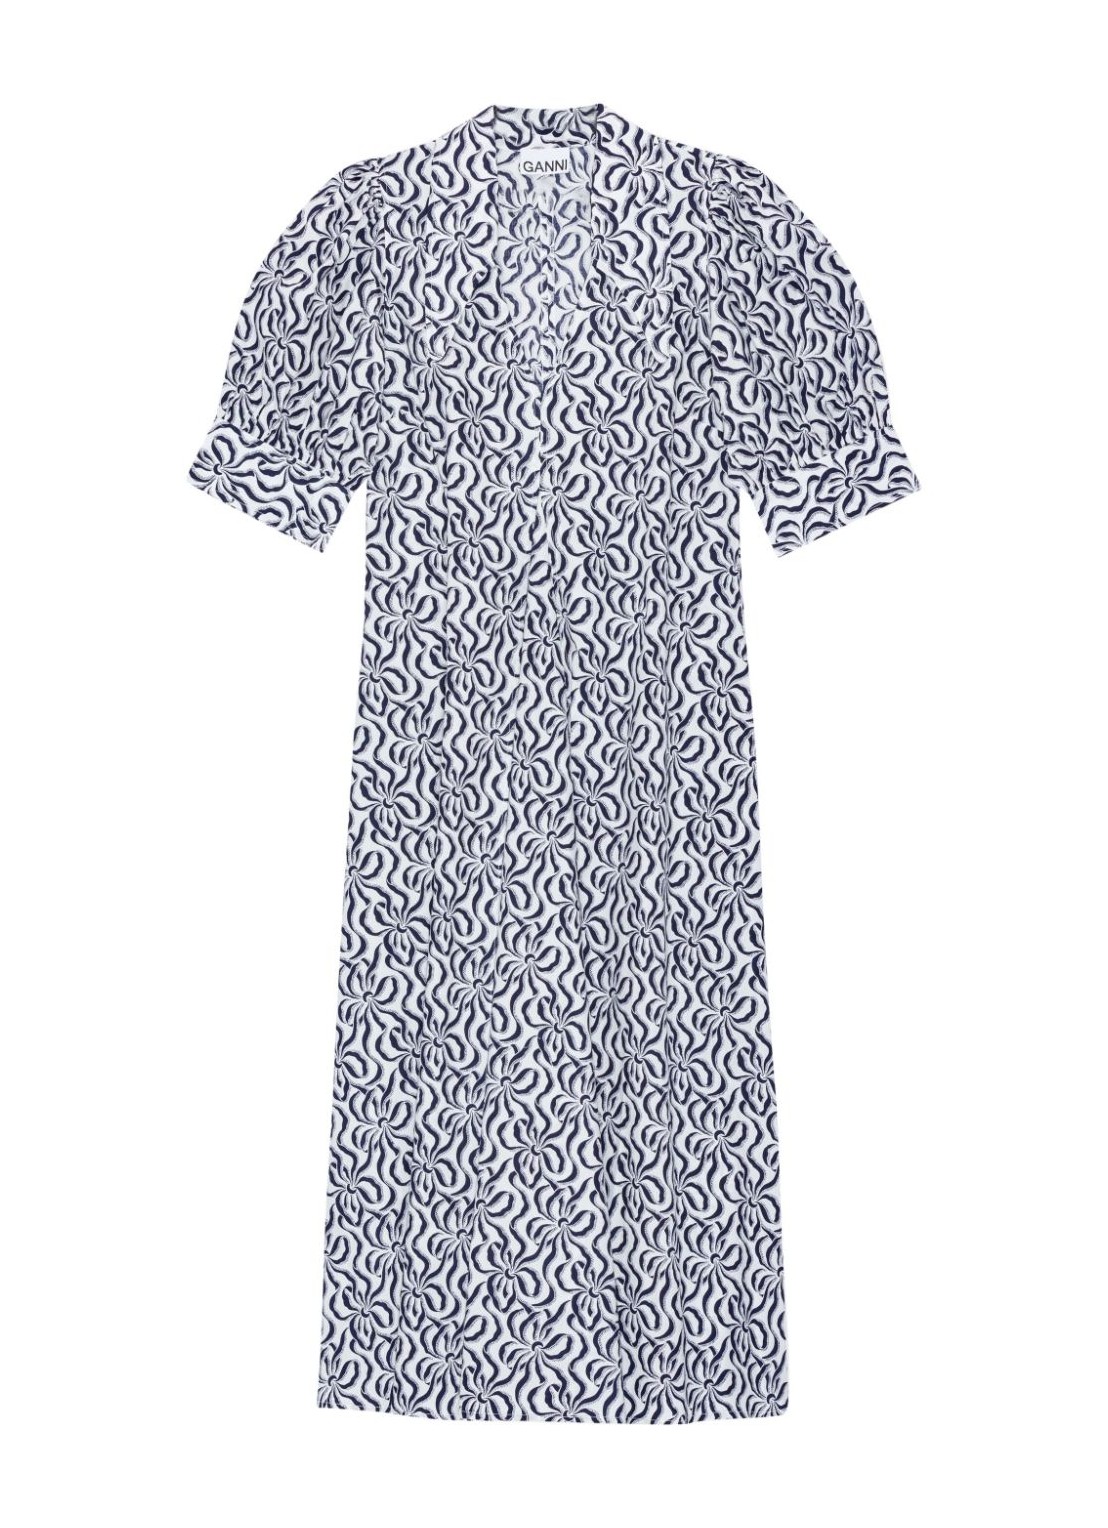 Vestido ganni dress woman printed cotton v-neck long dress f8857 135 talla 42
 